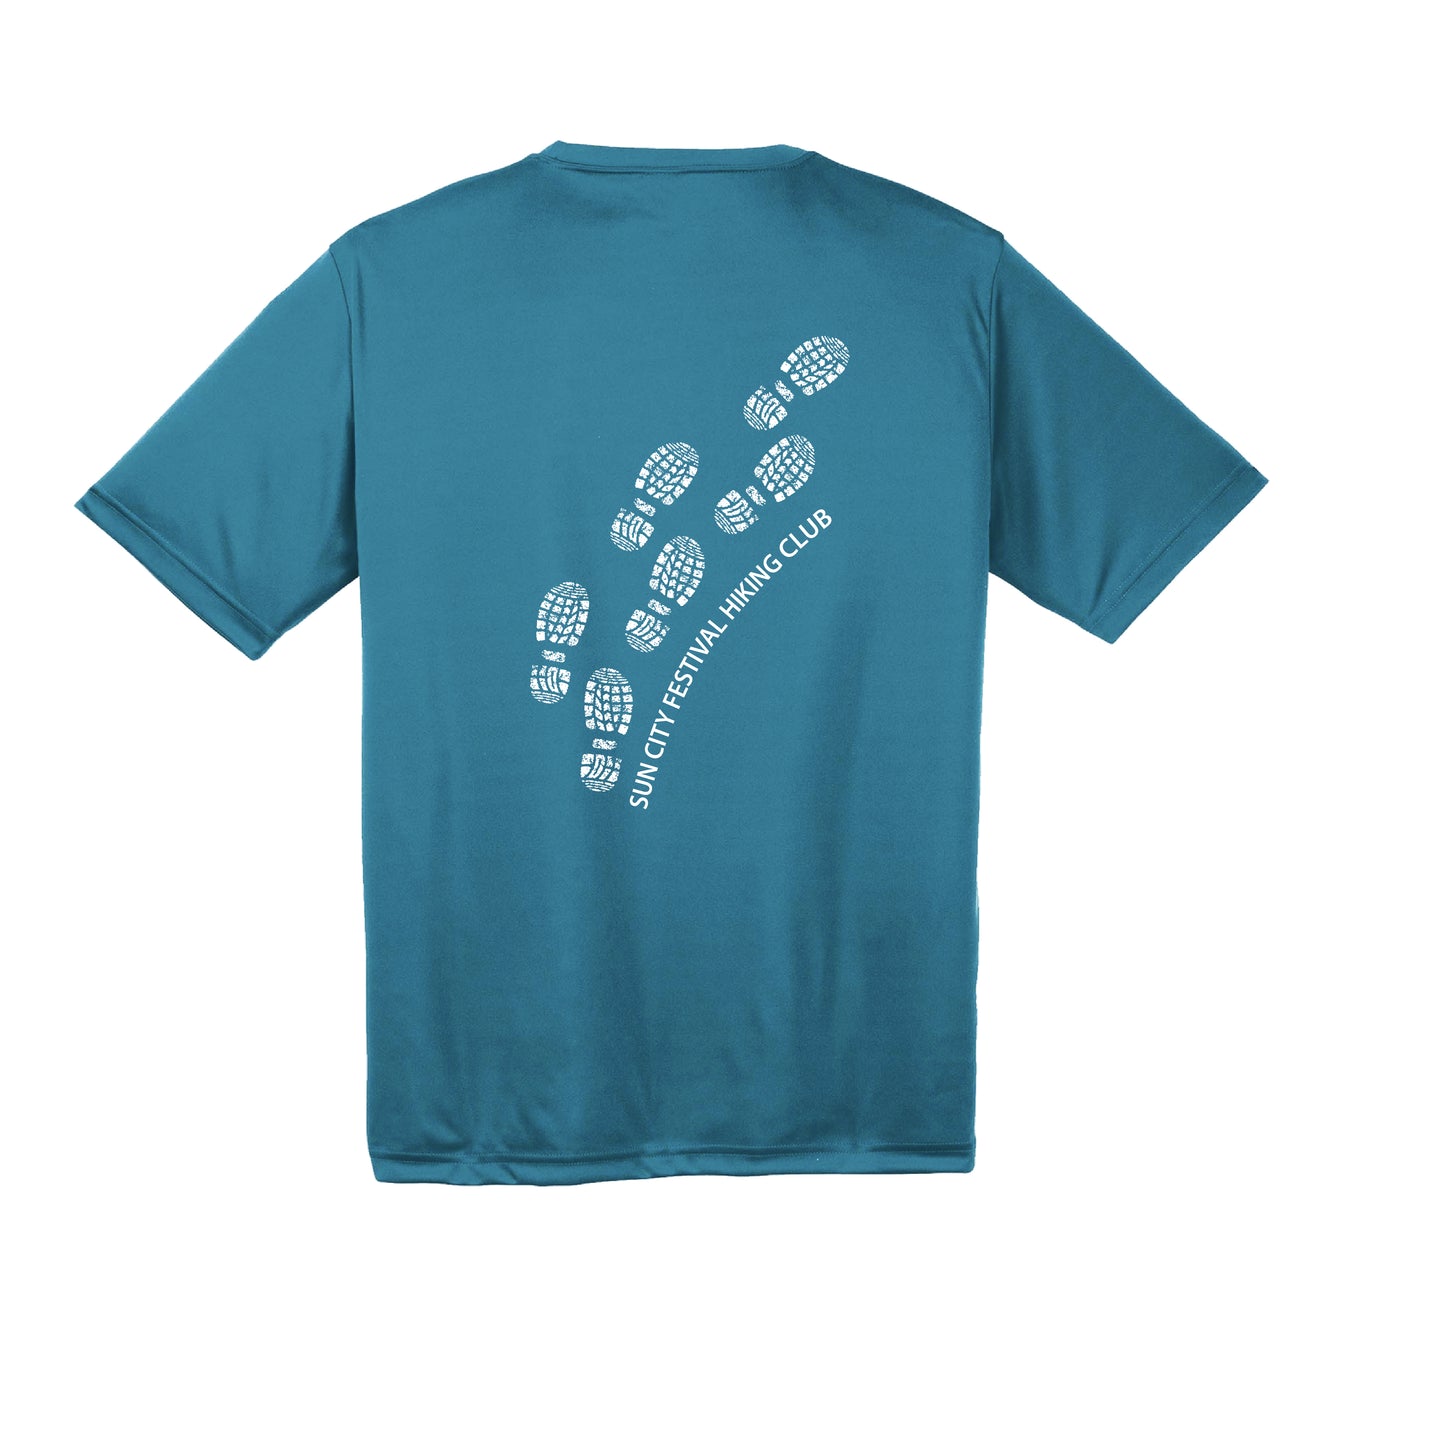 Sun City Festival Hiking Club | Men's Short Sleeve Athletic Shirt | 100% Polyester